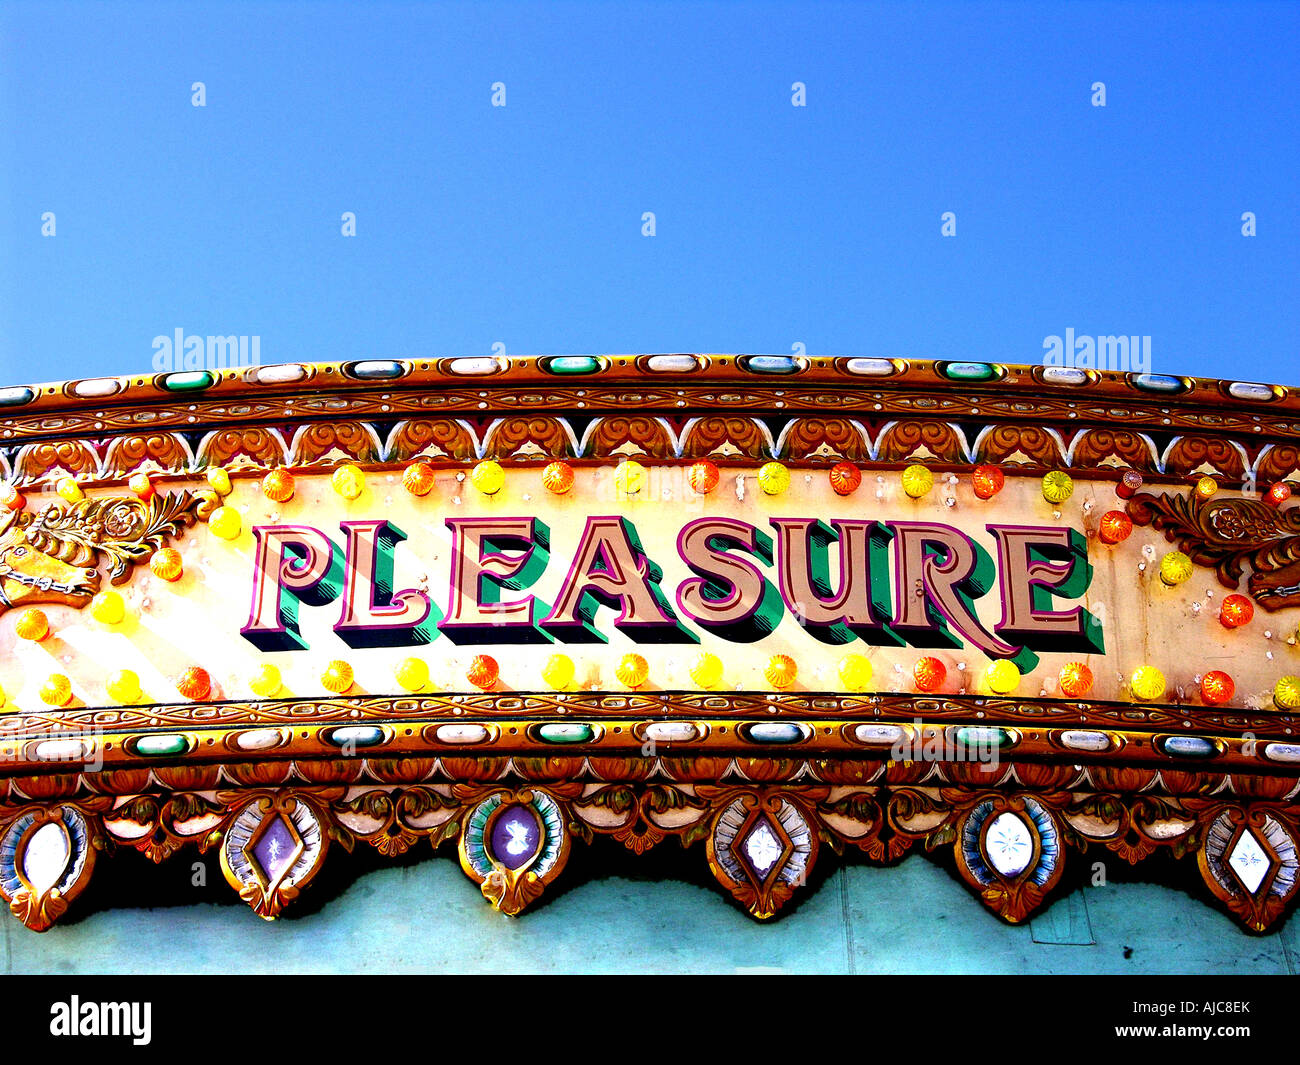 Pleasure, Carousel Detail Stock Photo